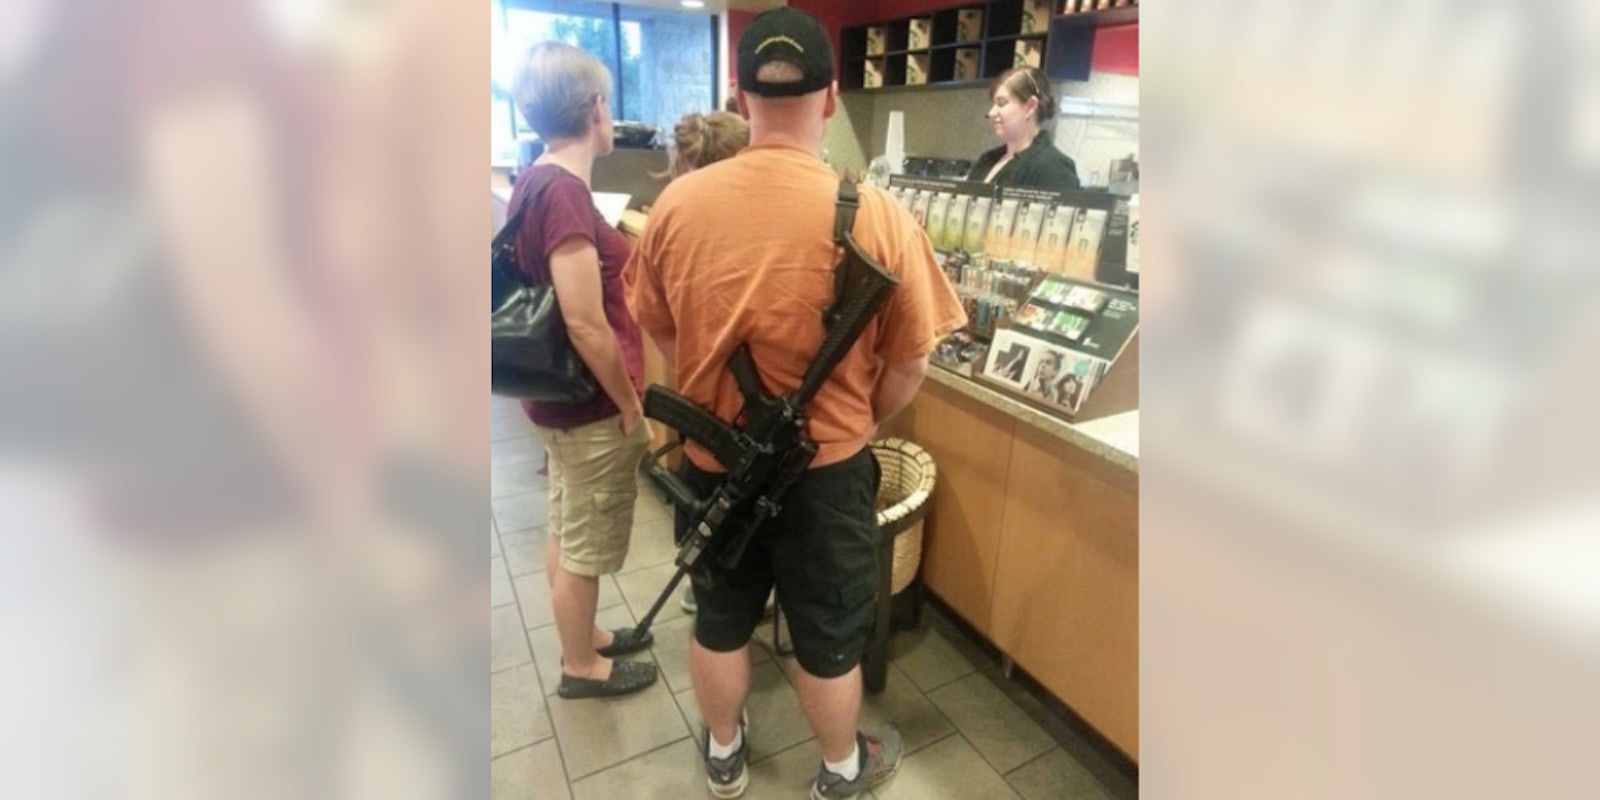 man carrying assault rifle in starbucks